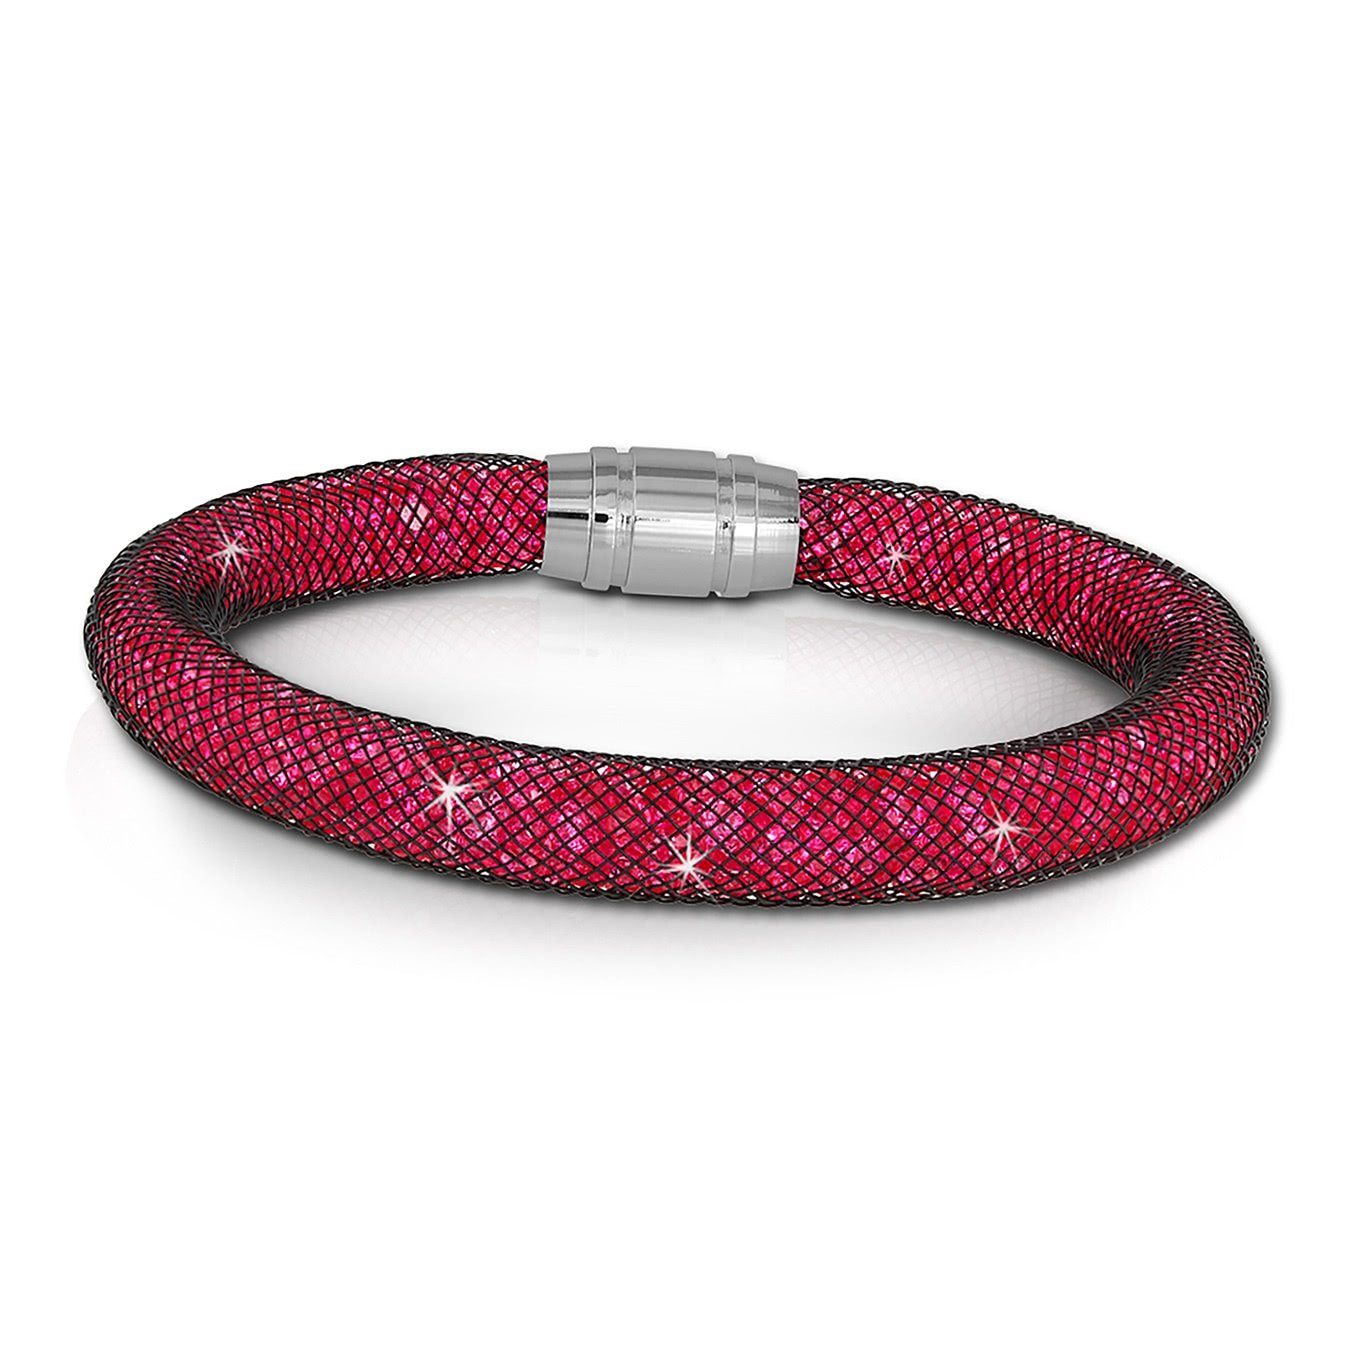 SilberDream Edelstahlarmband SilberDream Armband fuchsia Arm-Schmuck (Armband), Damenarmband mit Edelstahl-Verschluss, Farbe: rot, fuchsiafarben